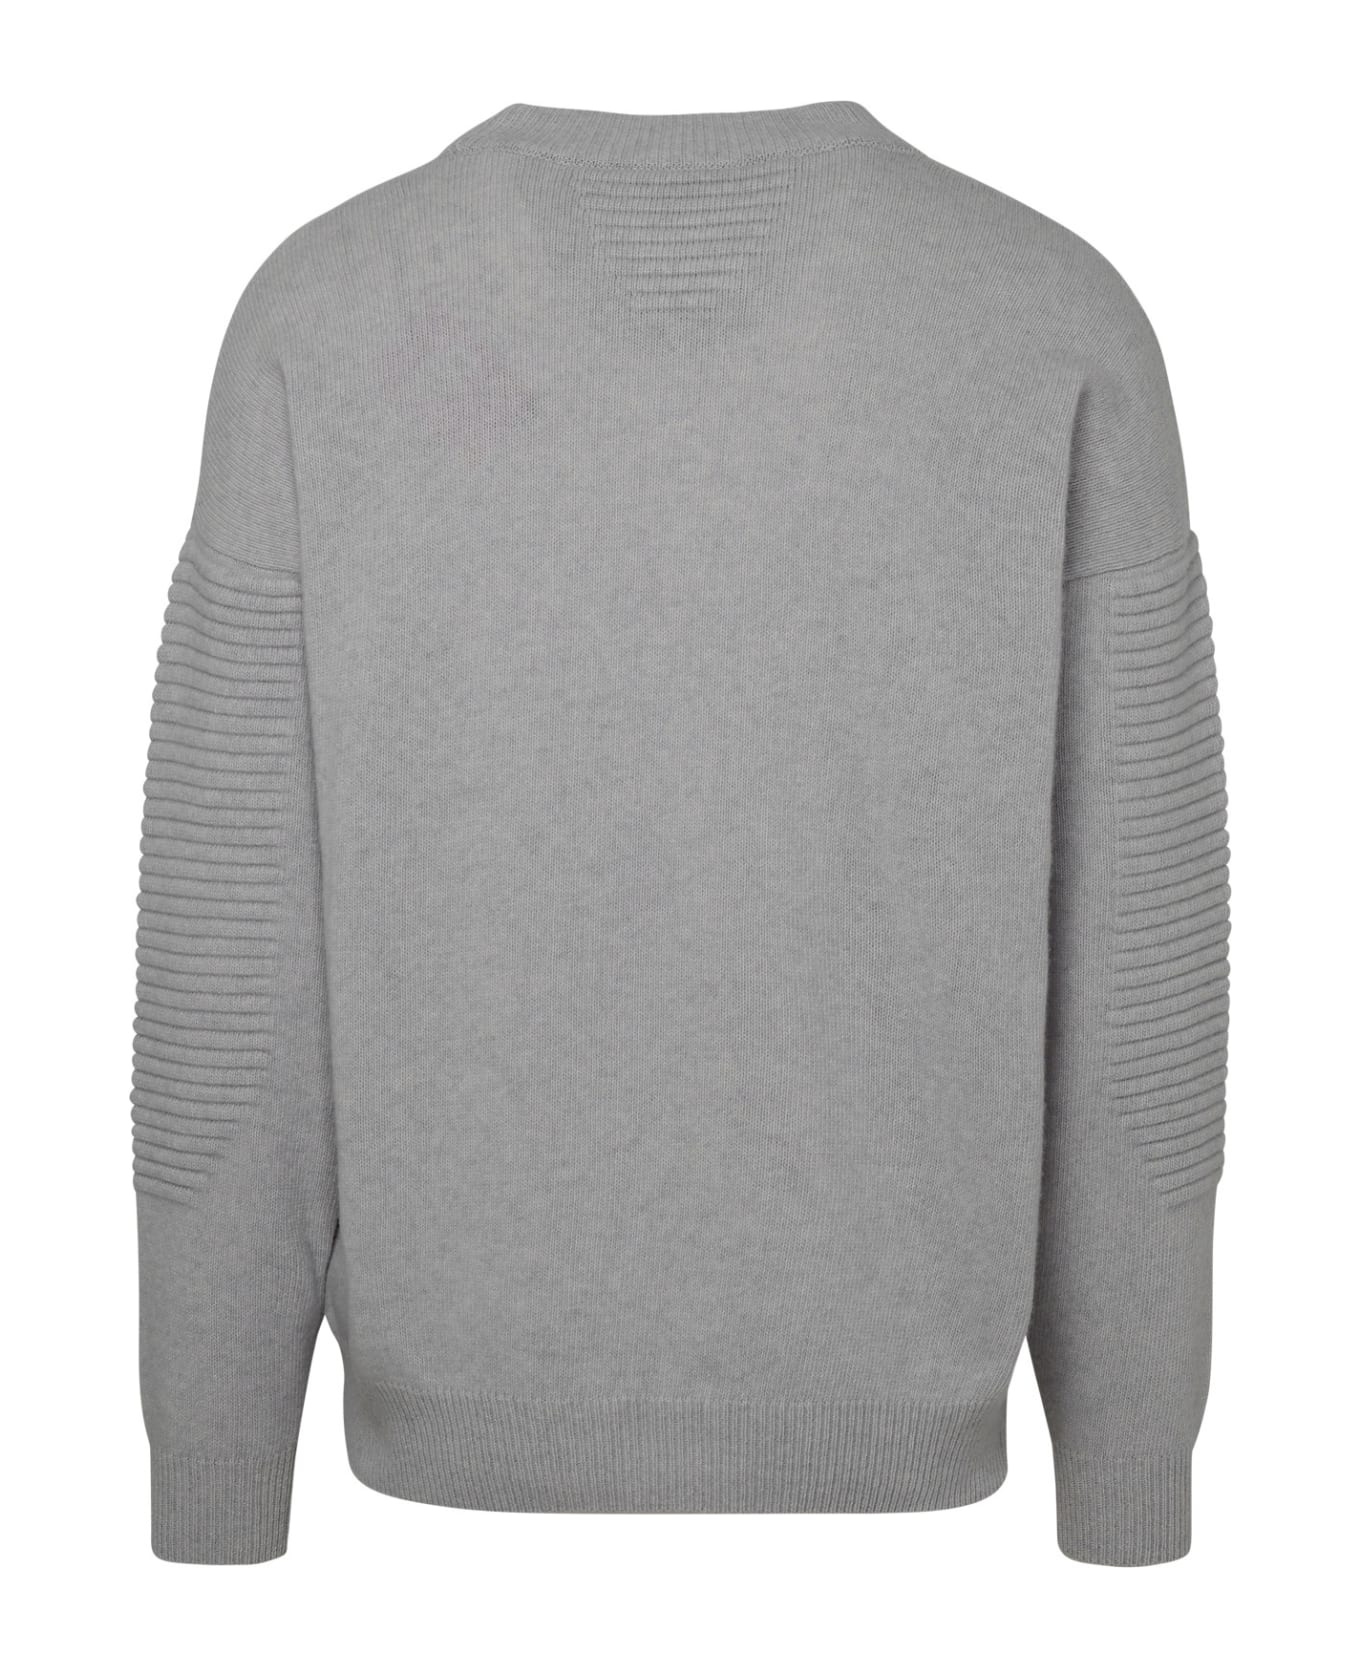 Ferrari Grey Cashmere Blend Sweater - Grey ニットウェア